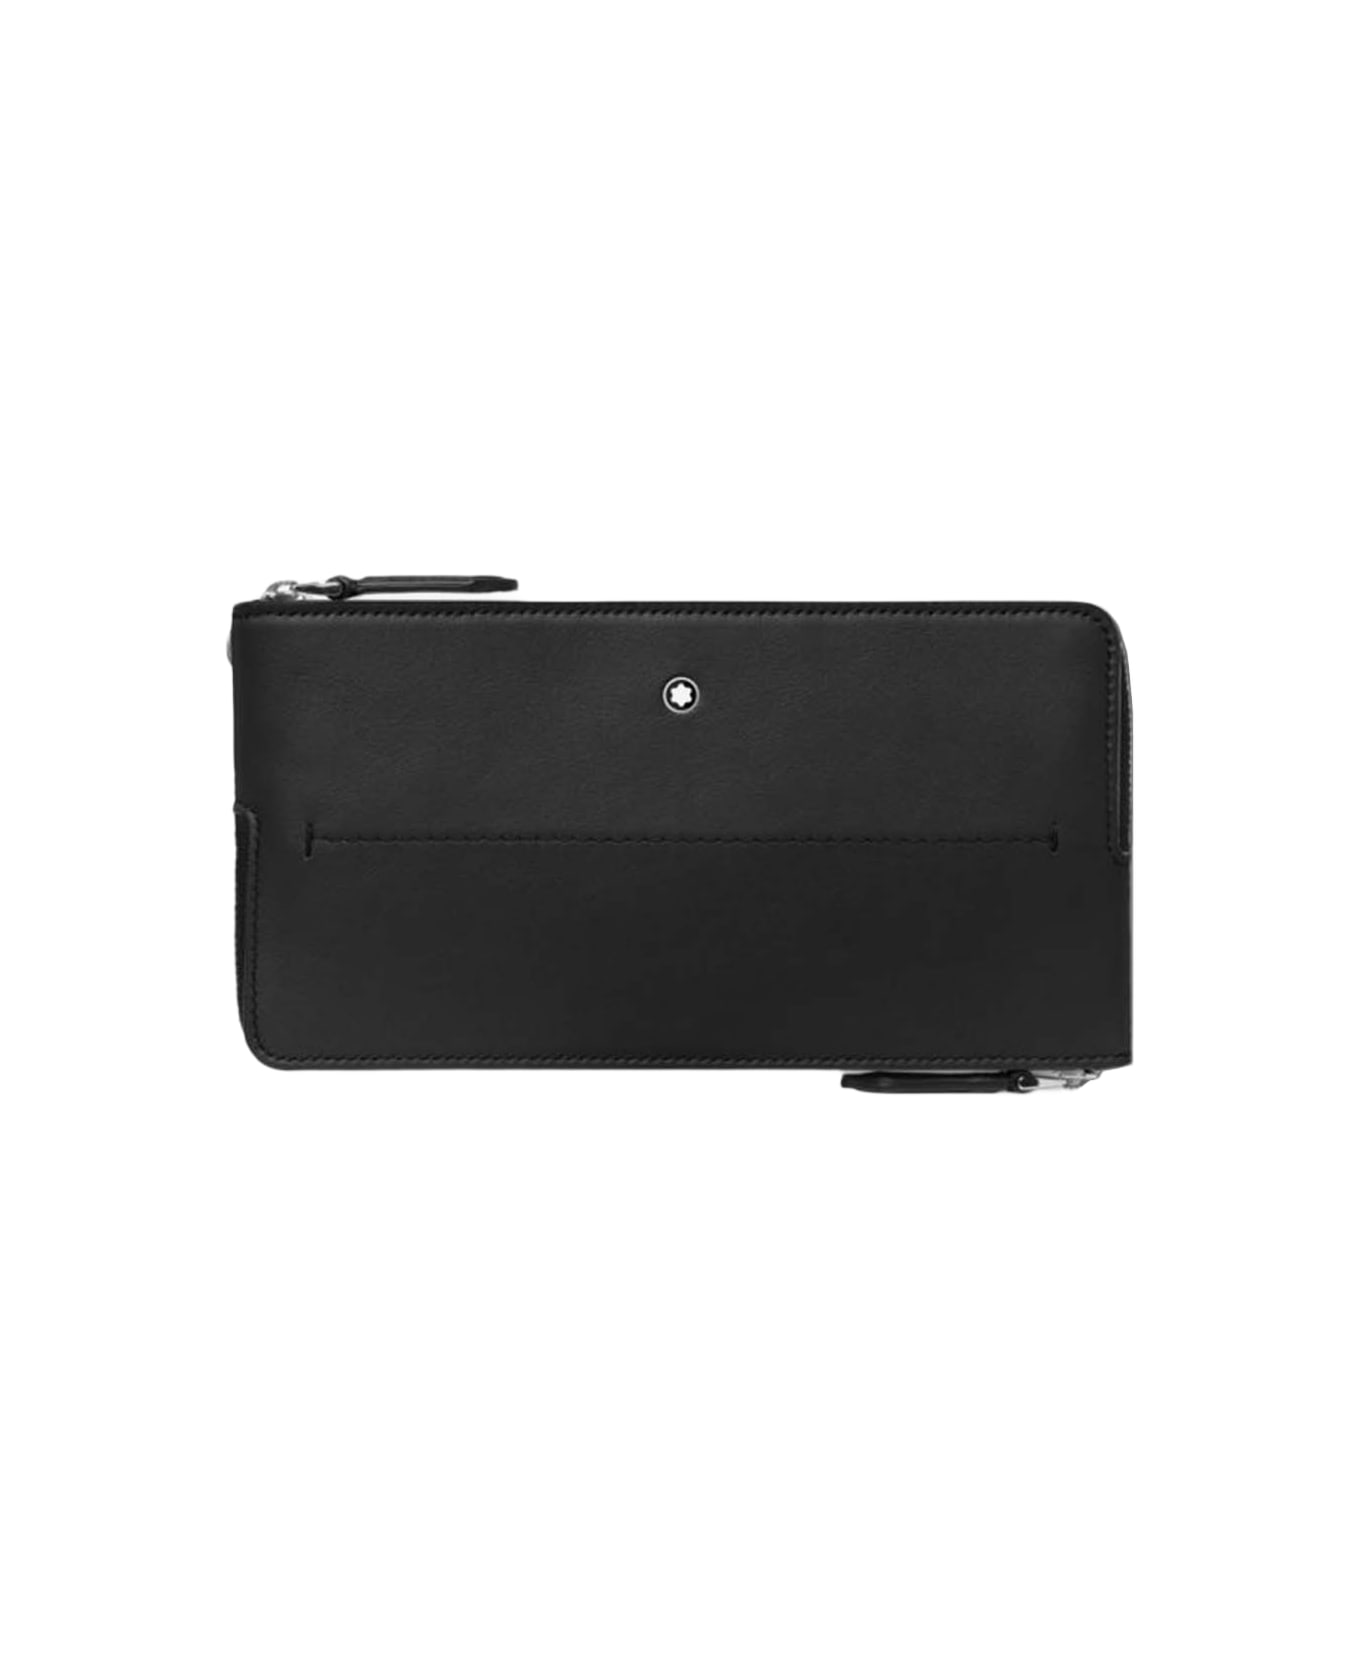 Montblanc Double Smartphone Case Meisterstück Selection Soft - Black